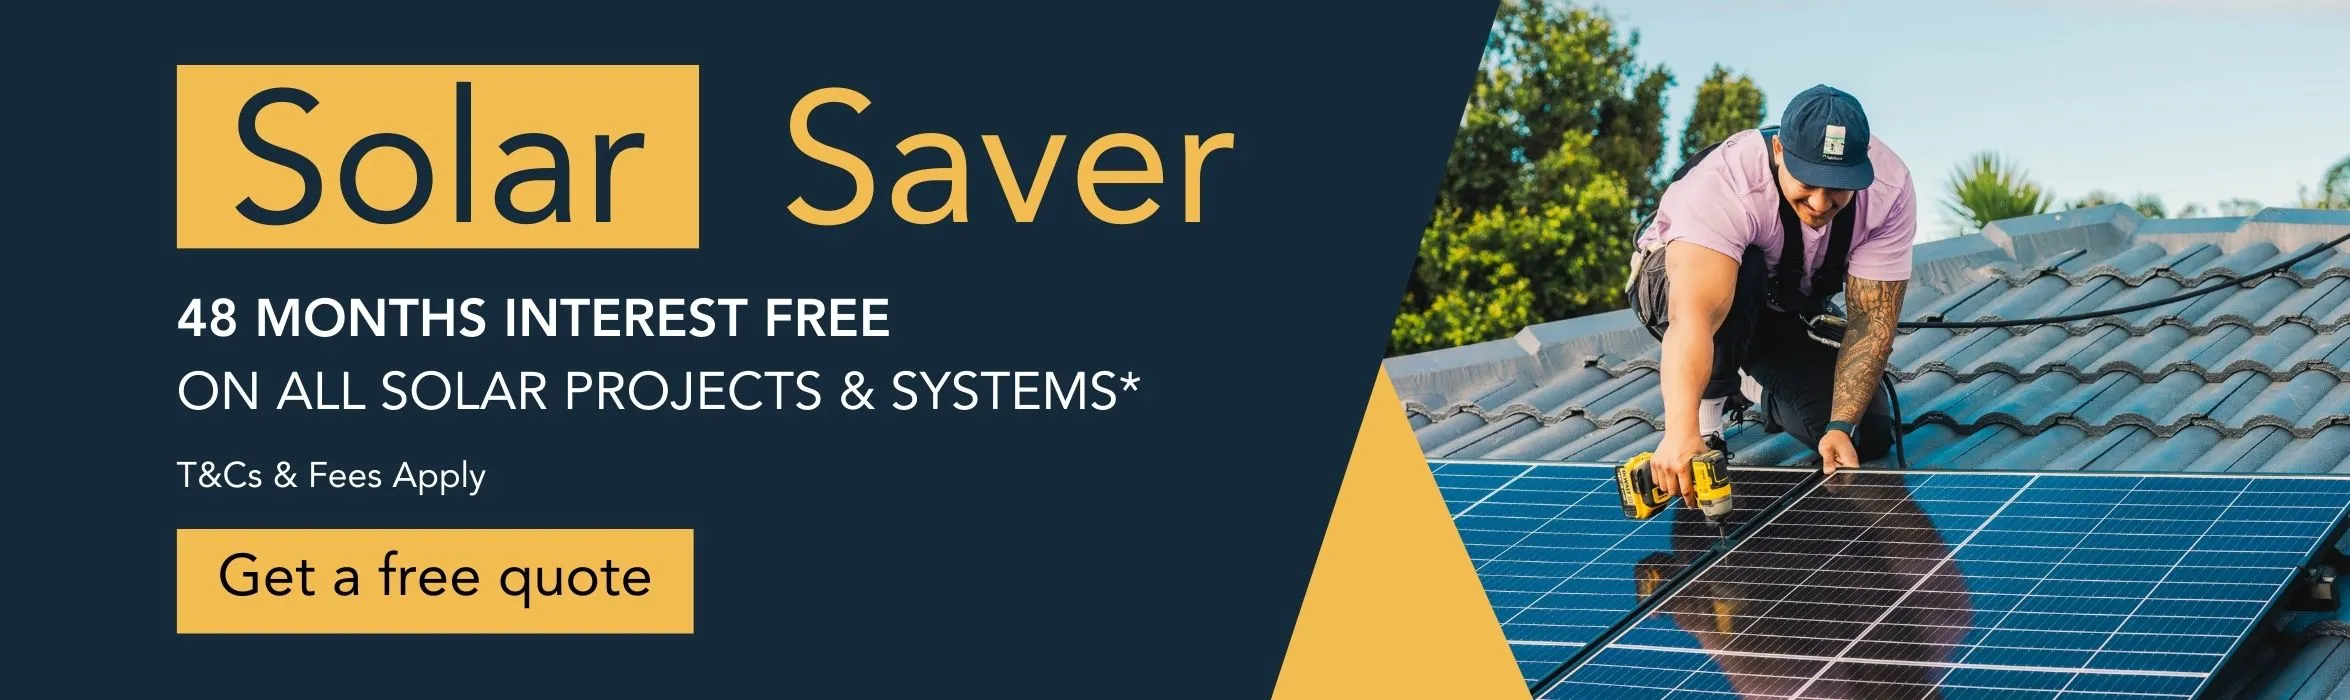 solar-saver-promo-banner-lightforce-solar